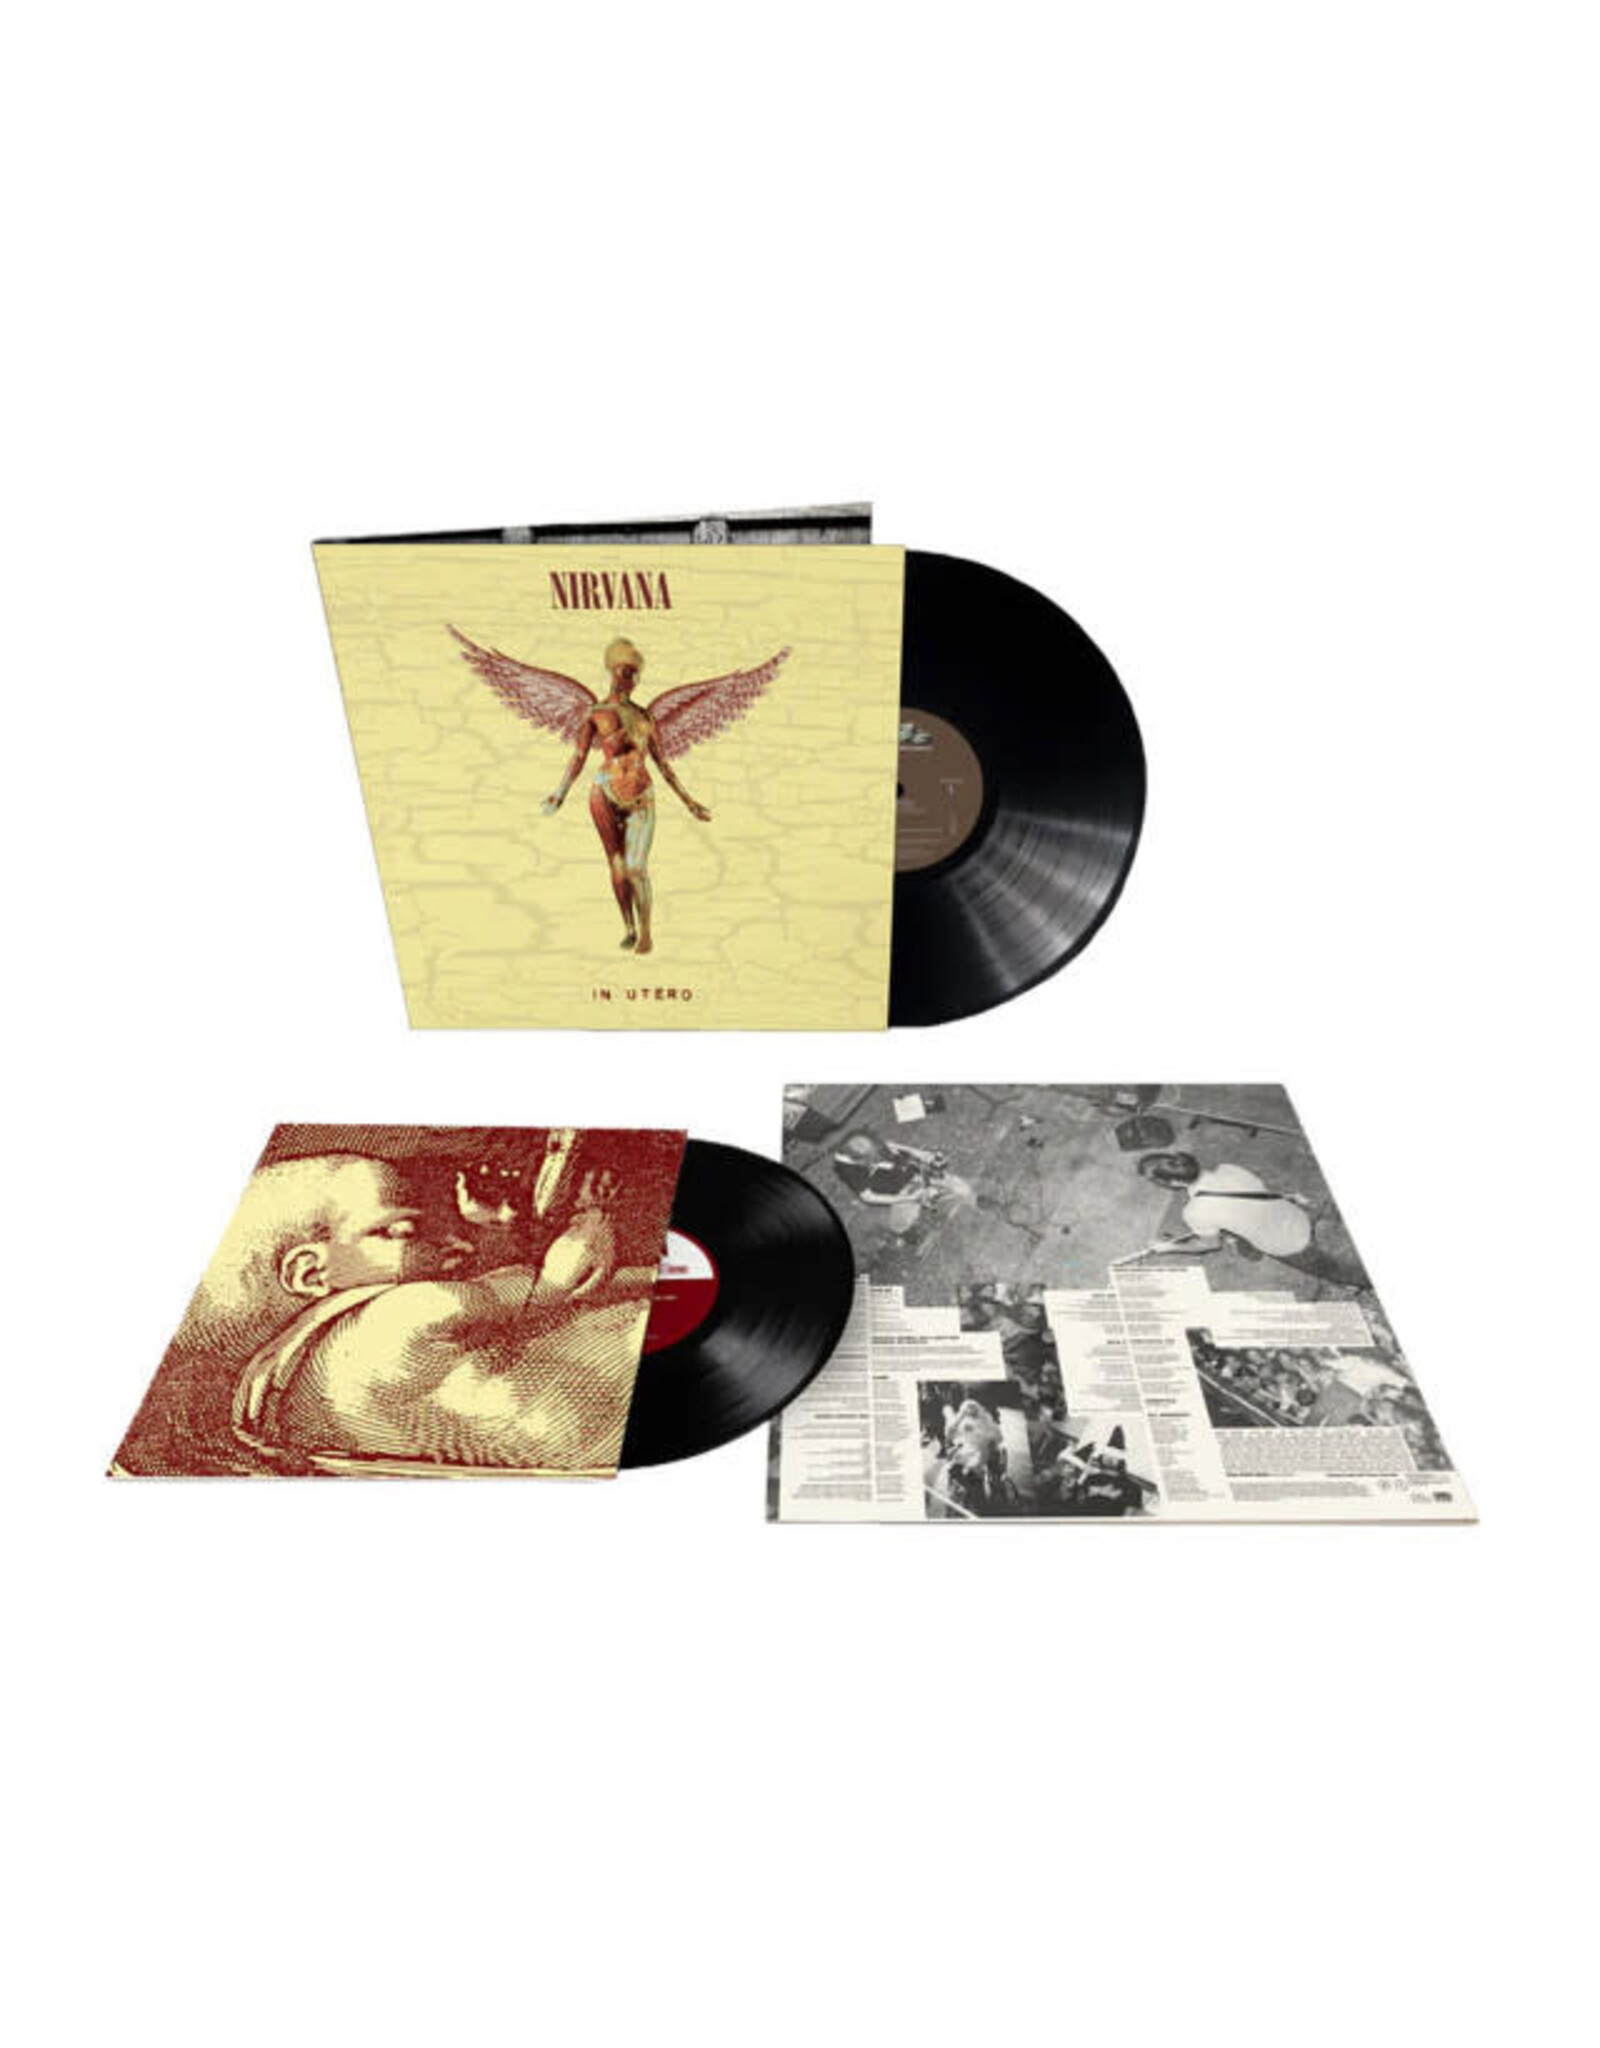 Geffen Nirvana: In Utero (180g w/bonus 10") LP